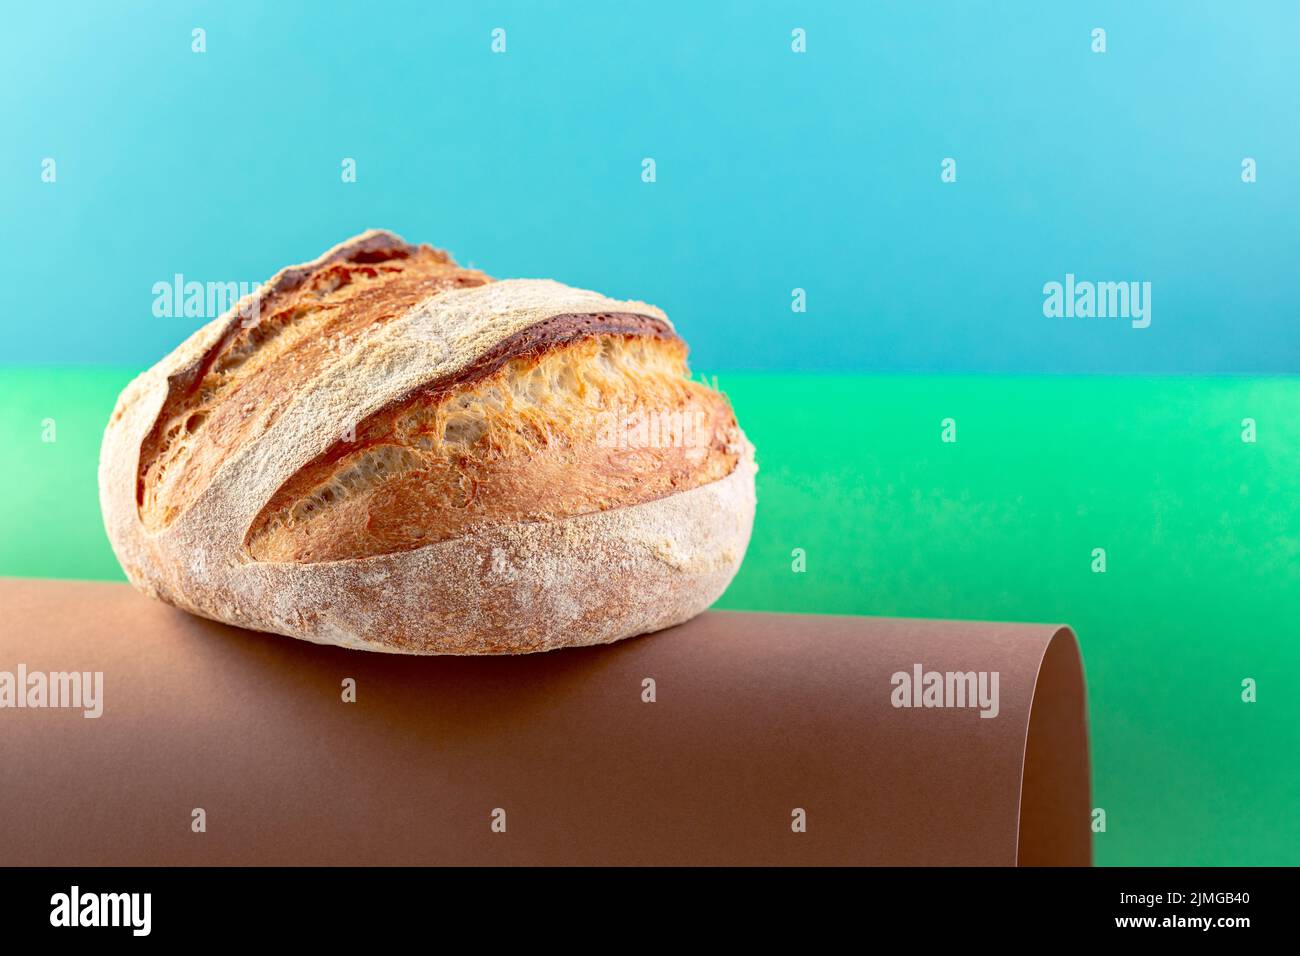 Artisanal sourdough bread. Stock Photo